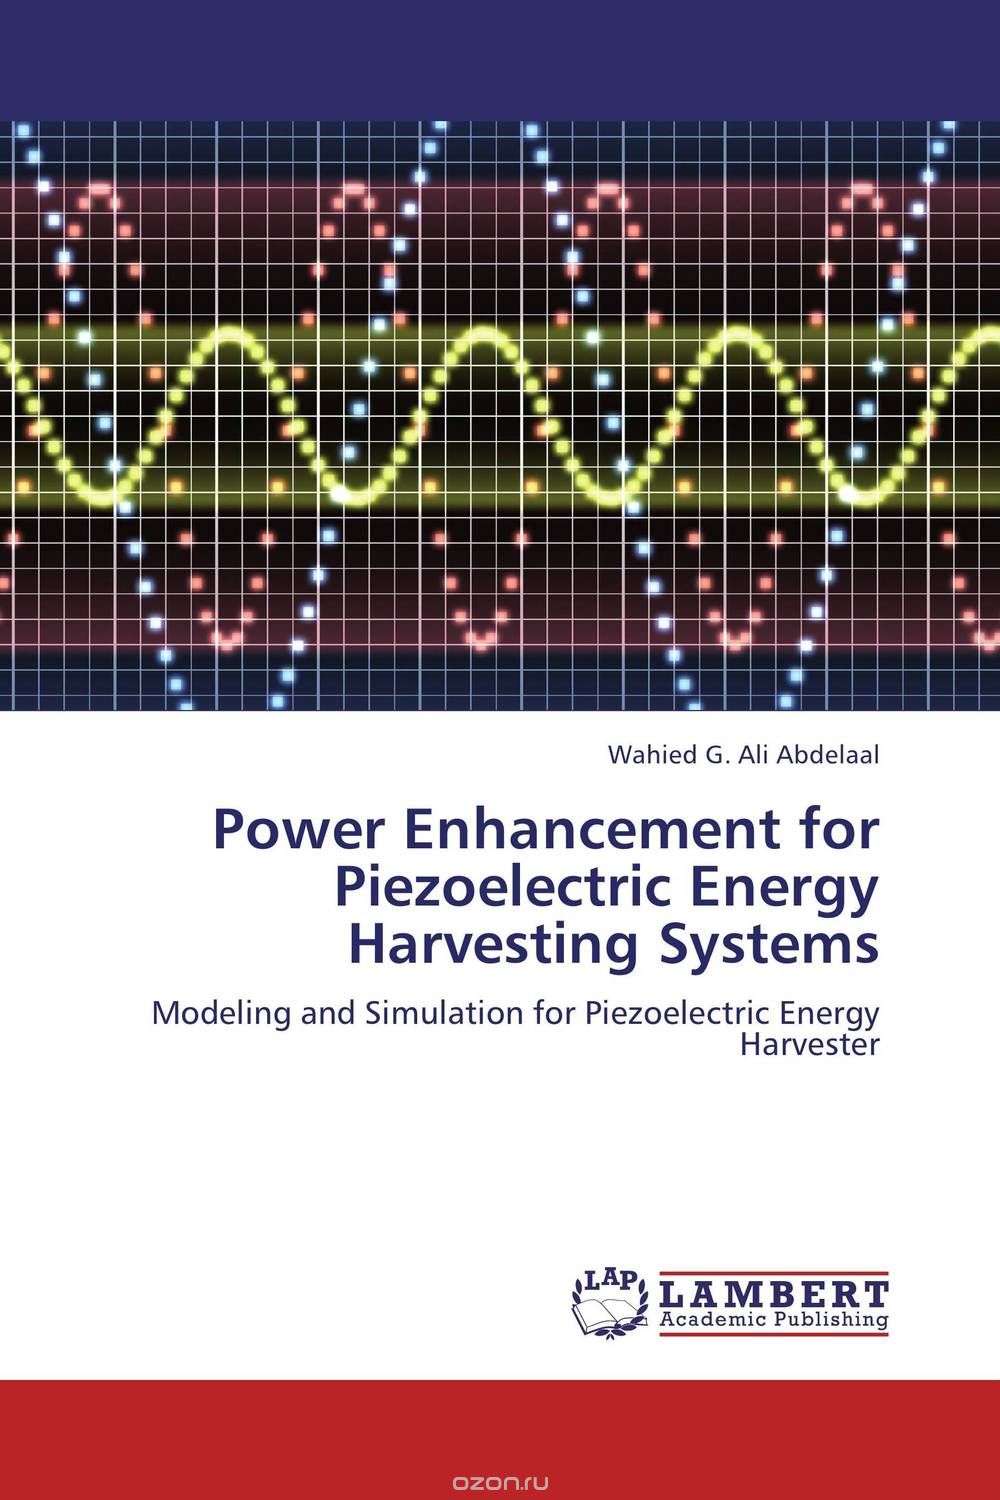 Скачать книгу "Power Enhancement for Piezoelectric Energy Harvesting Systems"